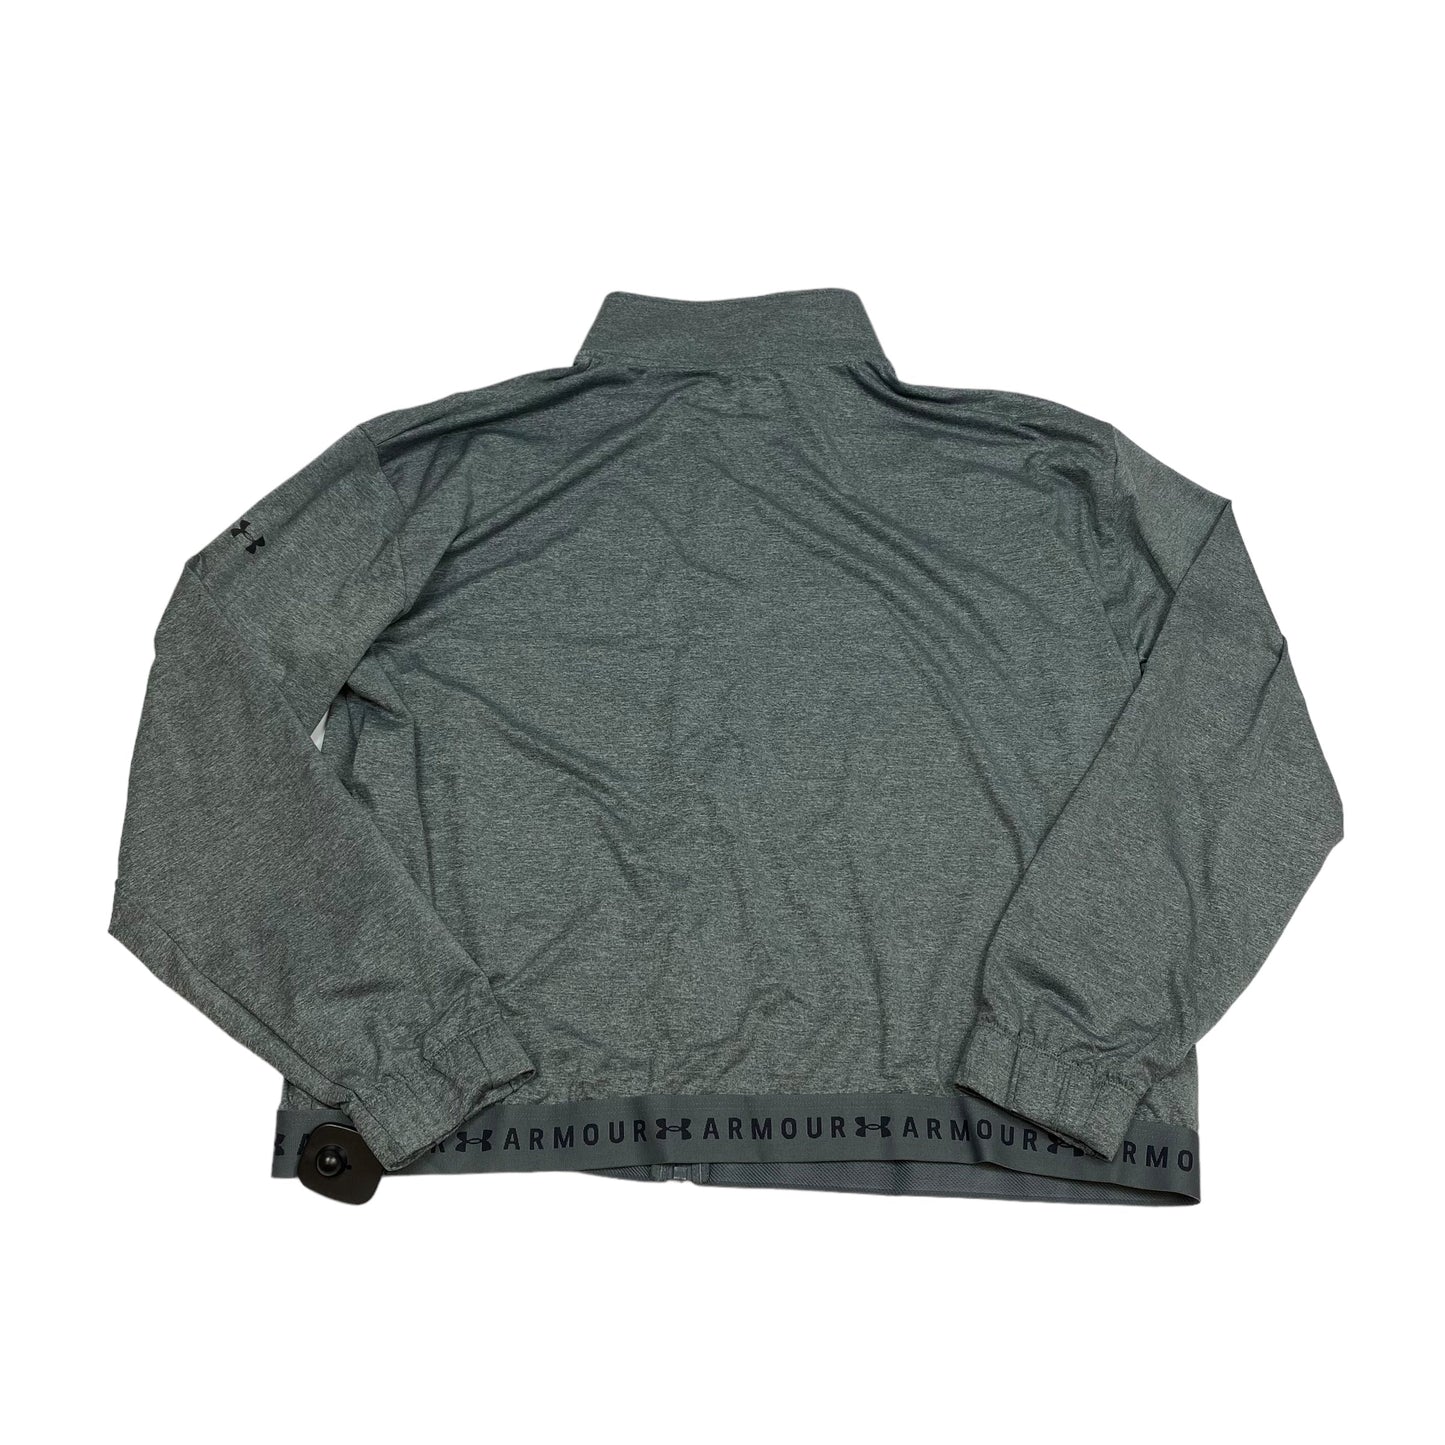 Grey Athletic Jacket Under Armour, Size Xl